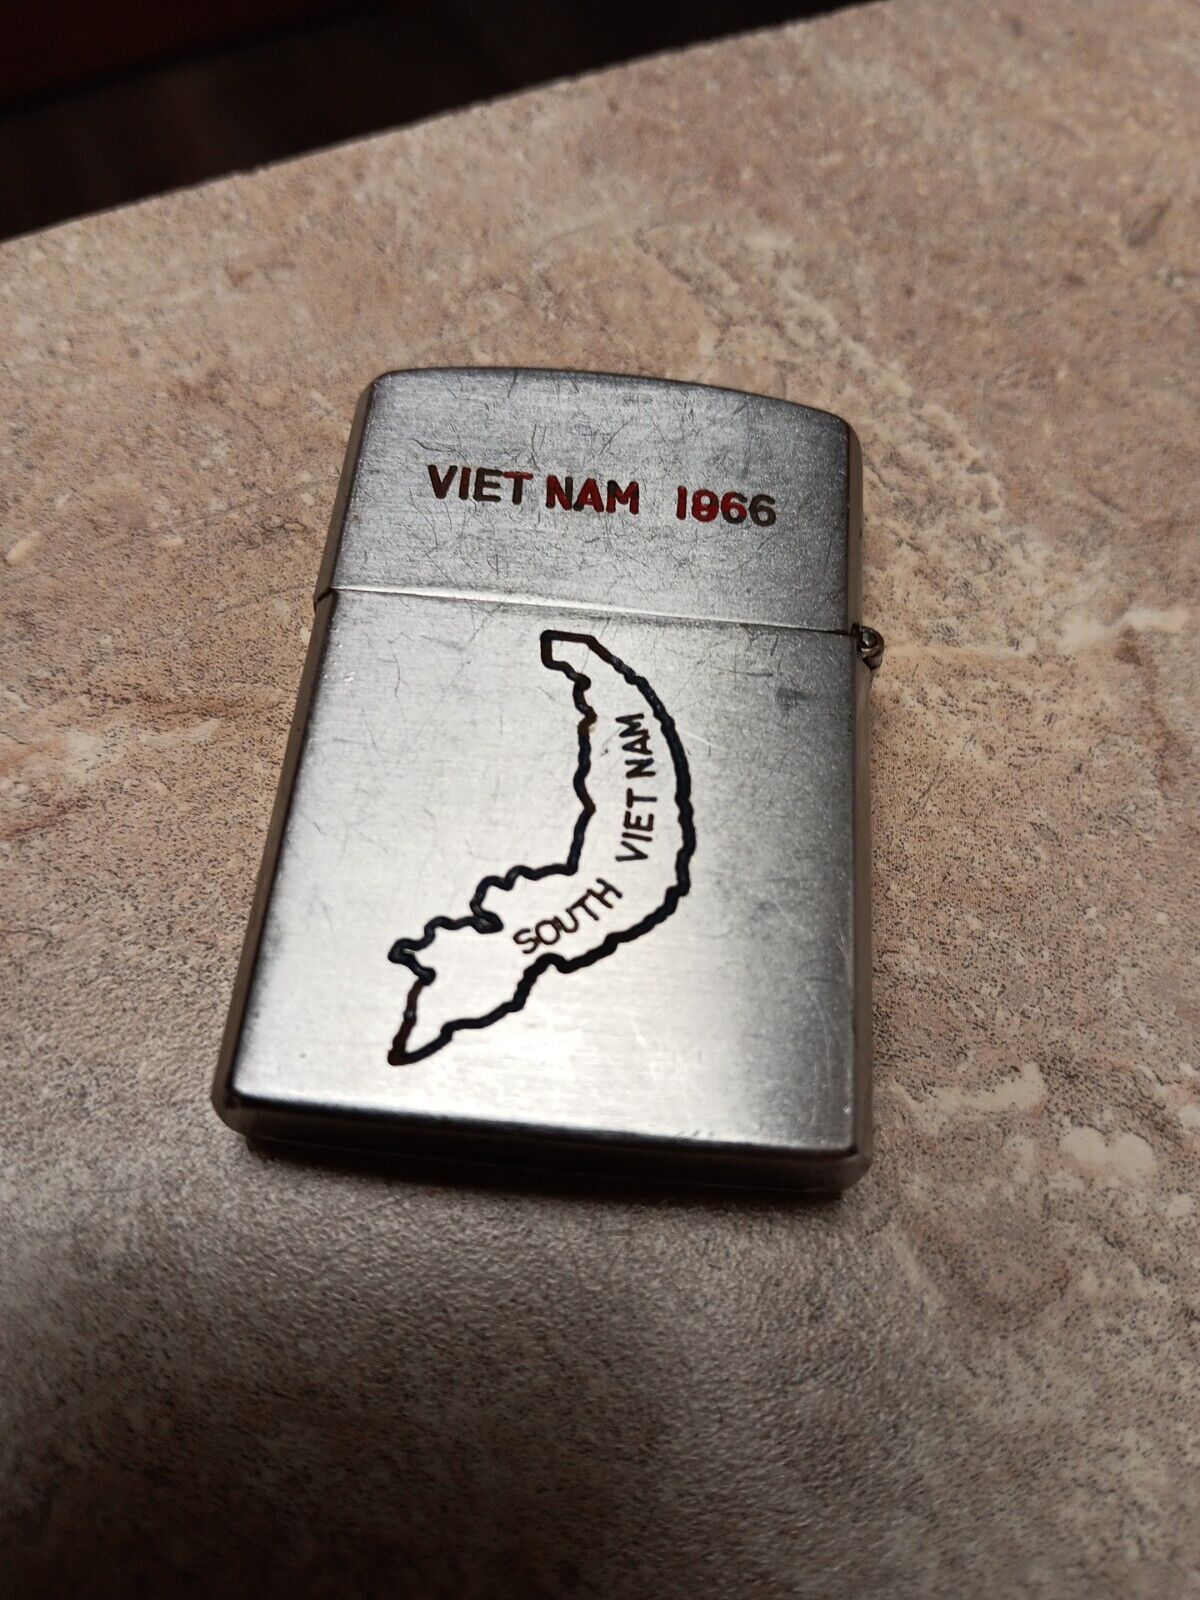 VTG 1966 south vietnam lighter americans finest freedoms frontier soilder & gun